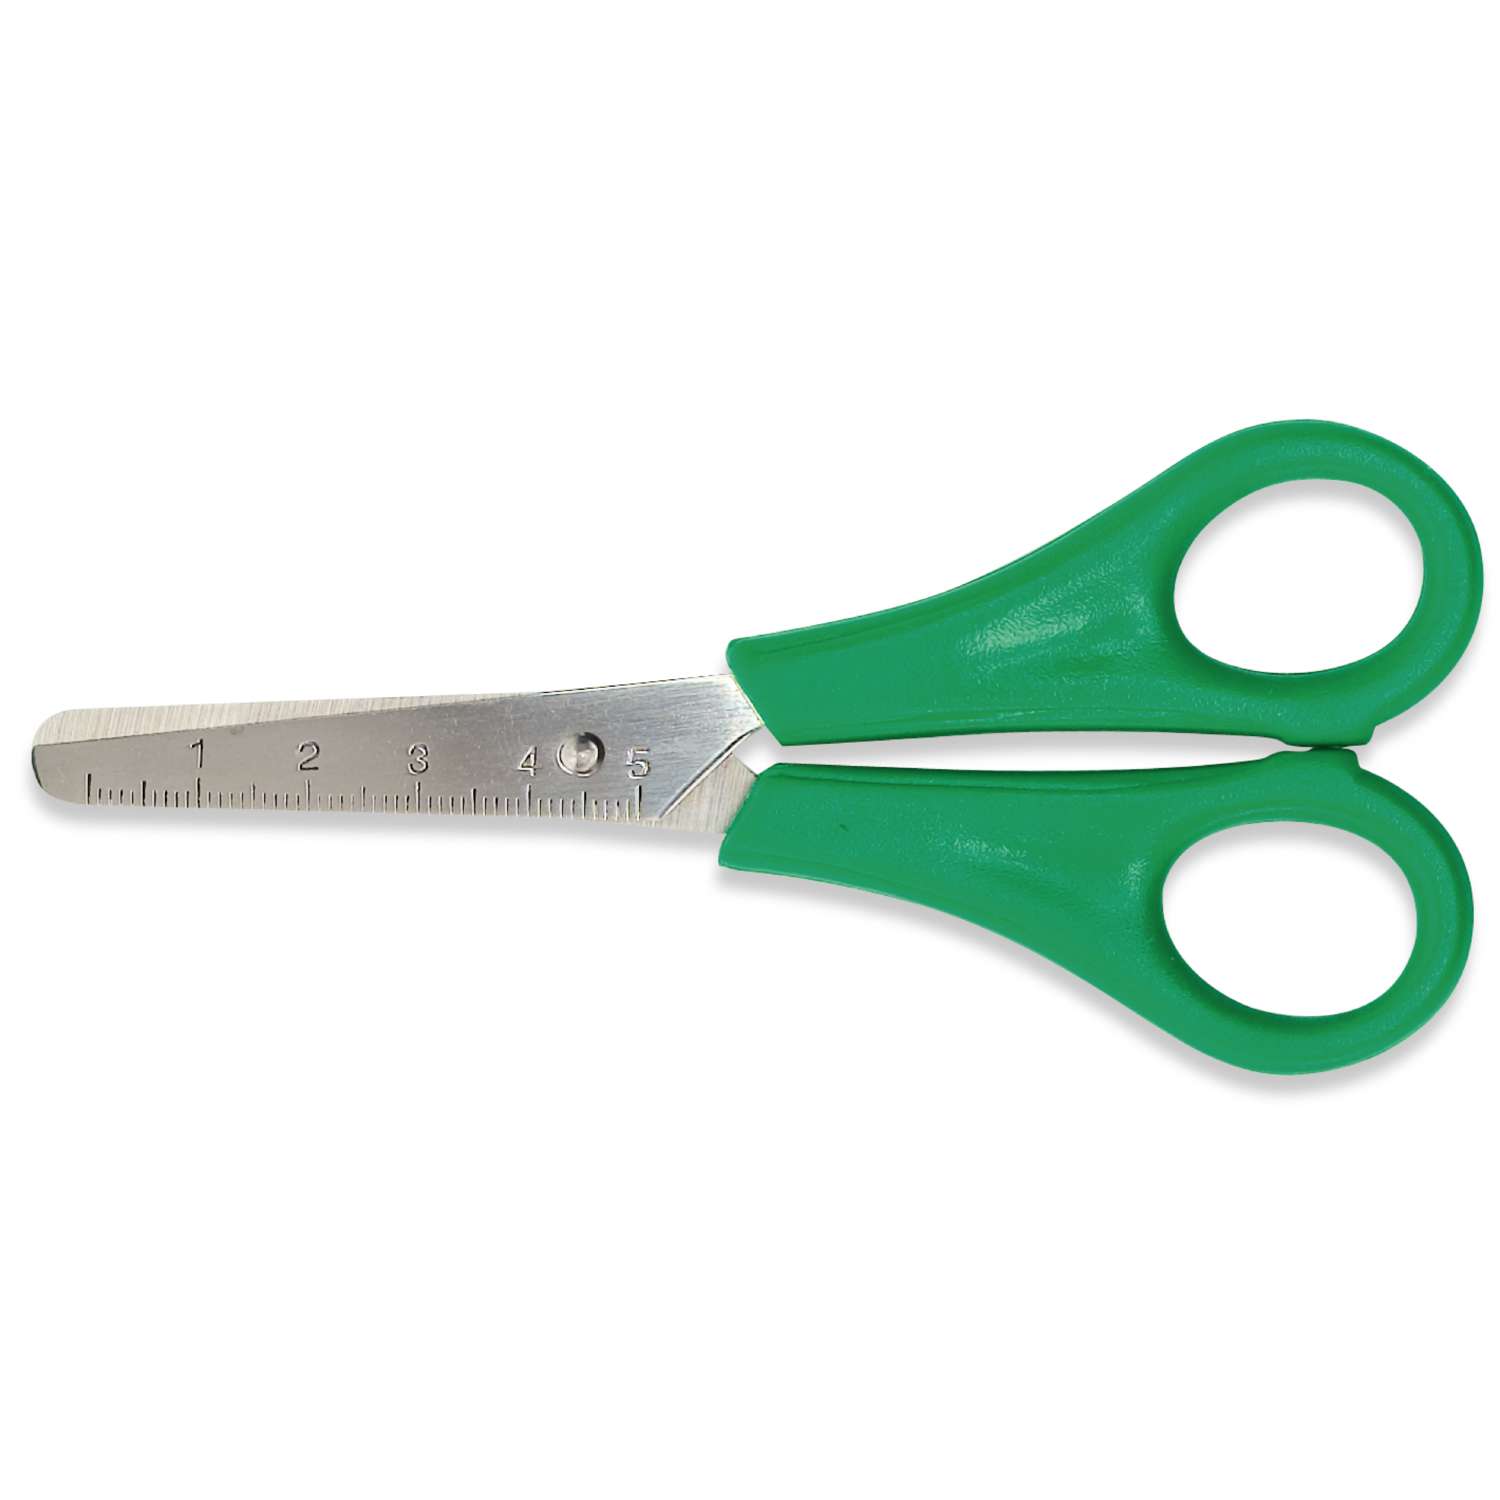 3 1/2 Curved Scrapbooking Scissors